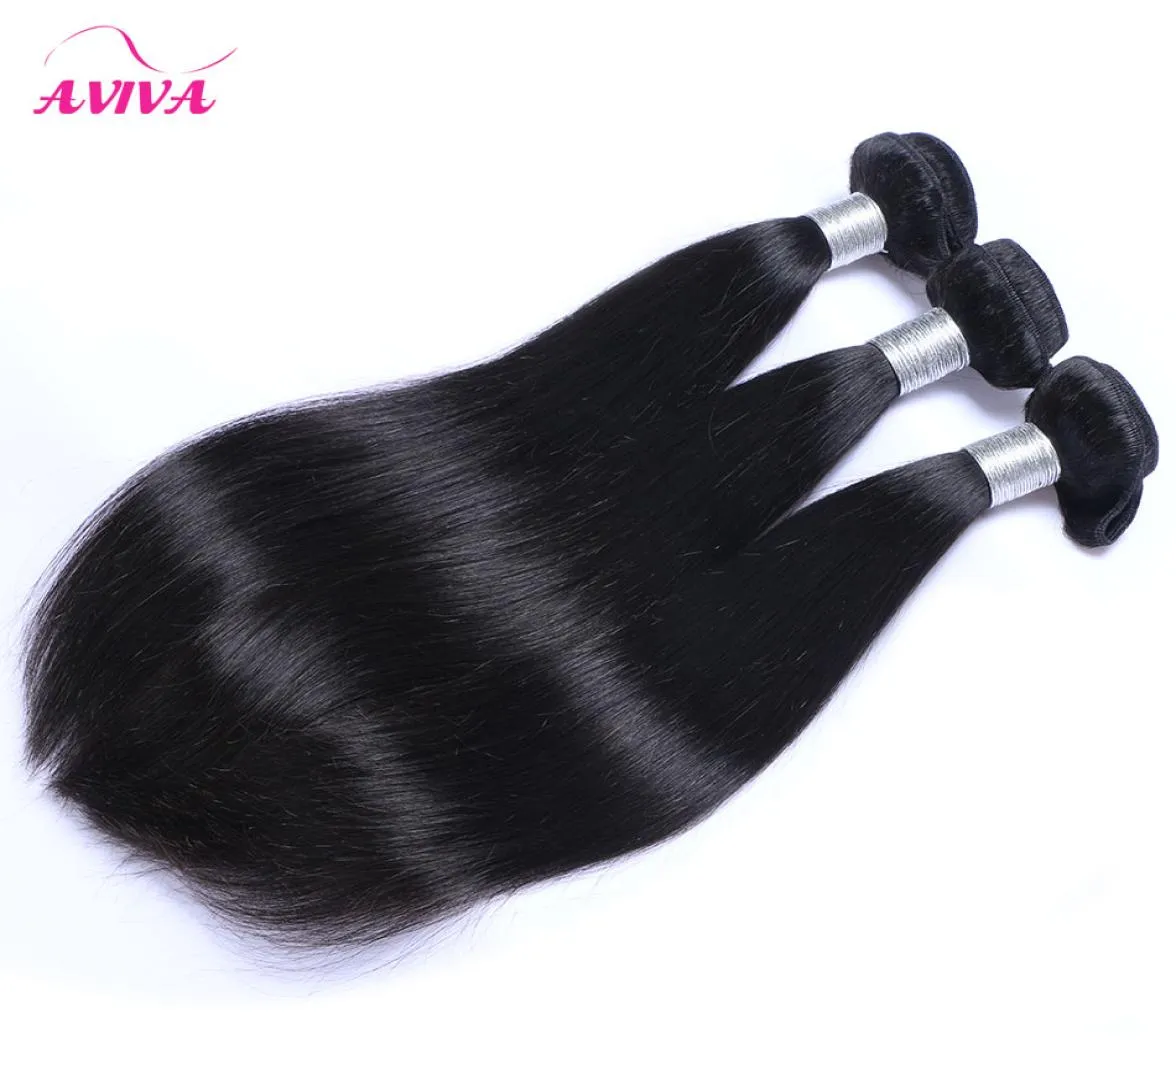 Brazilian Peruvian Malaysian Indian Straight Virgin Hair Weaves Bundles Unprocessed Remy Human Hair Extensions 34 Pcs Natural Bla3083941